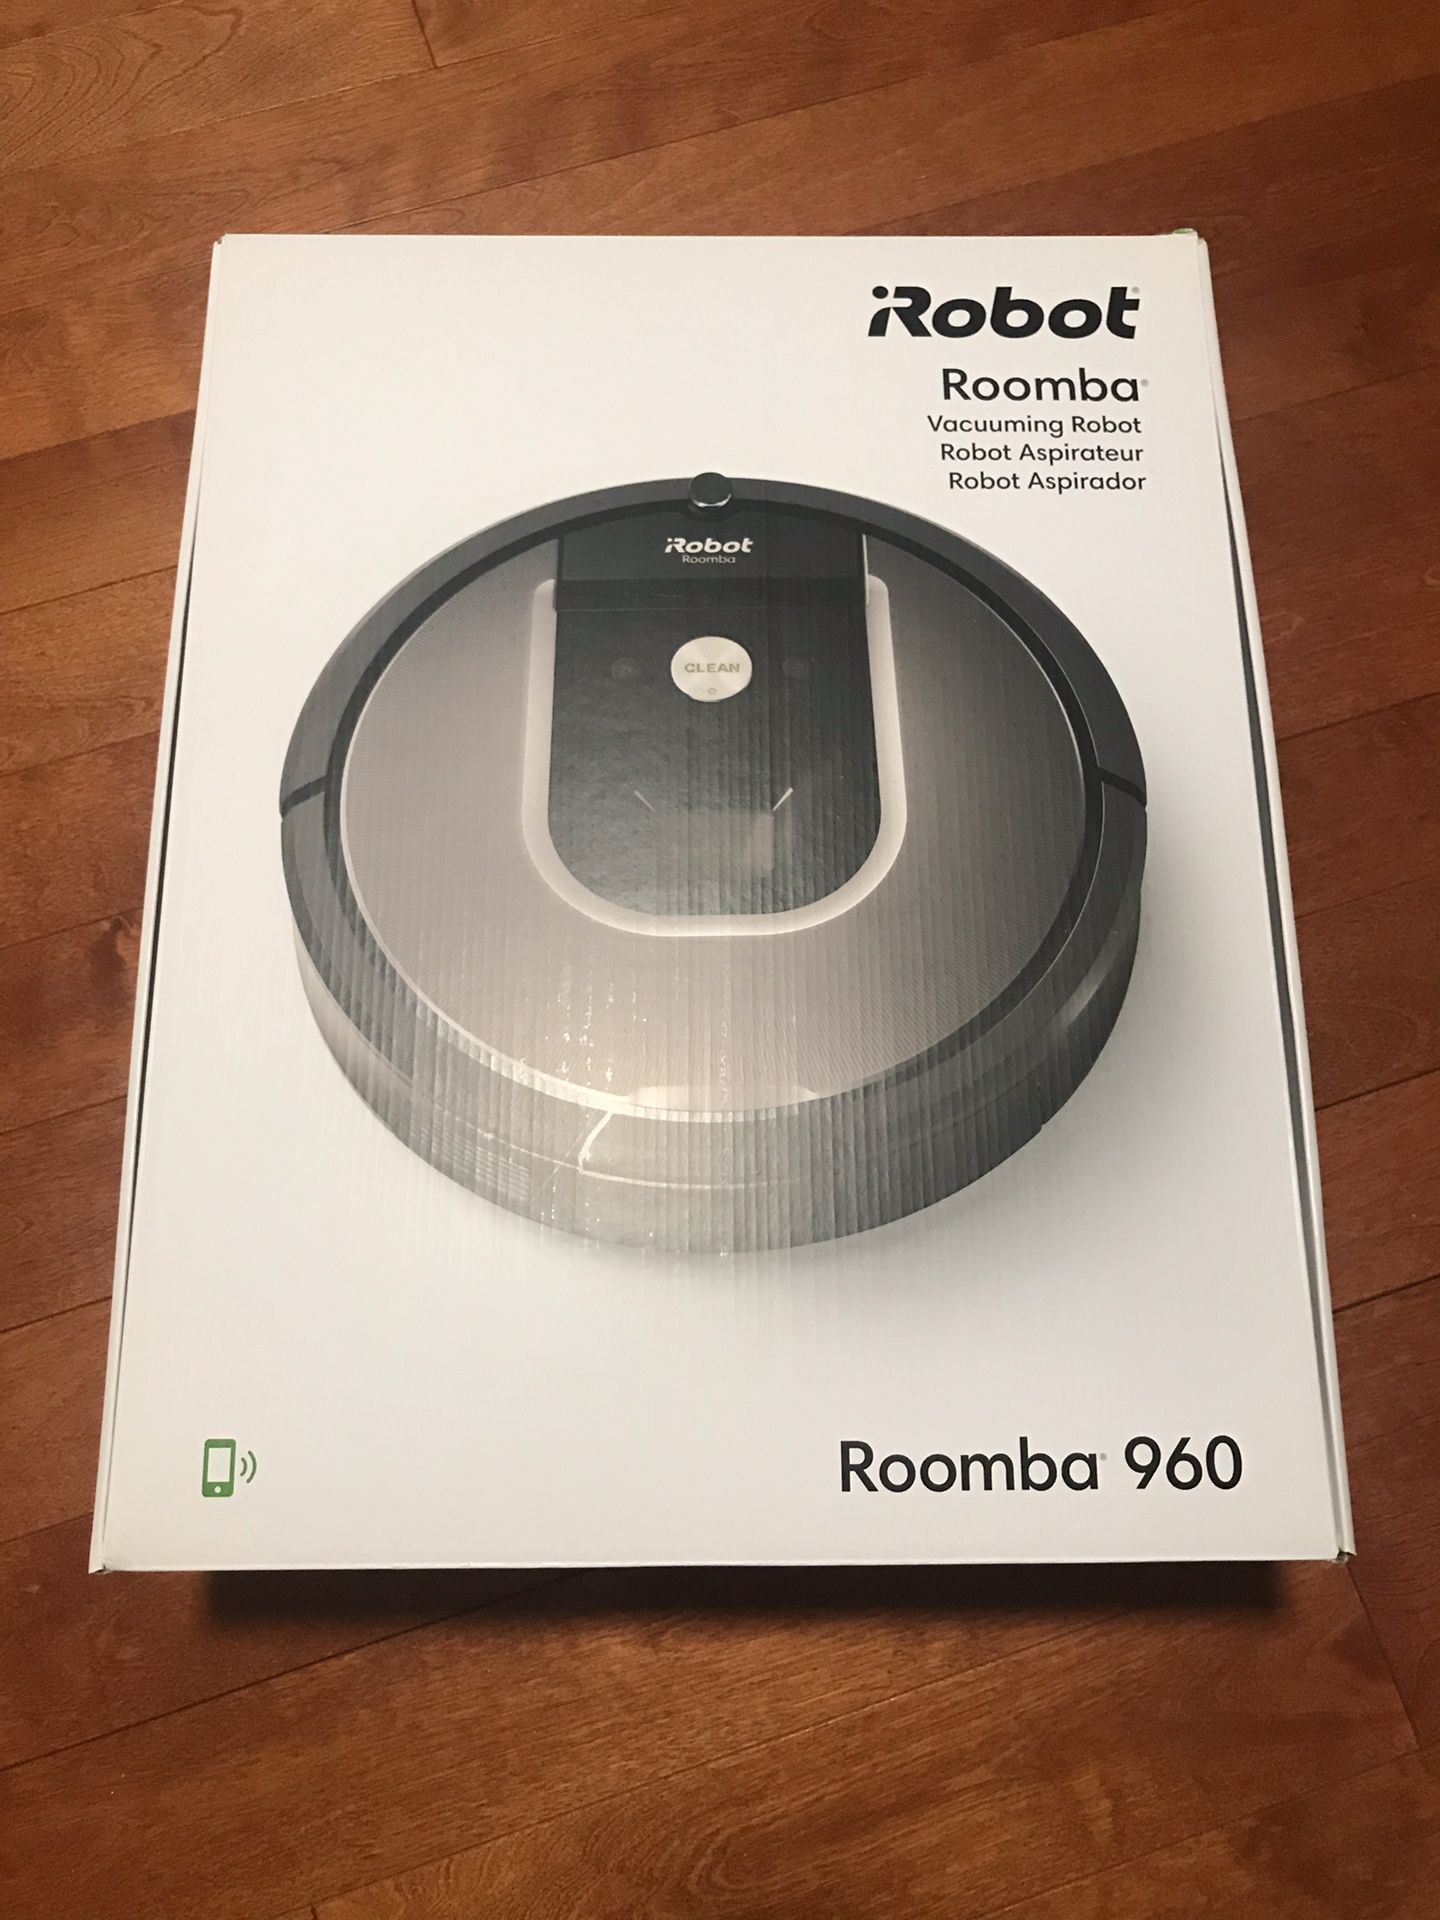 Roomba 960 vacuum